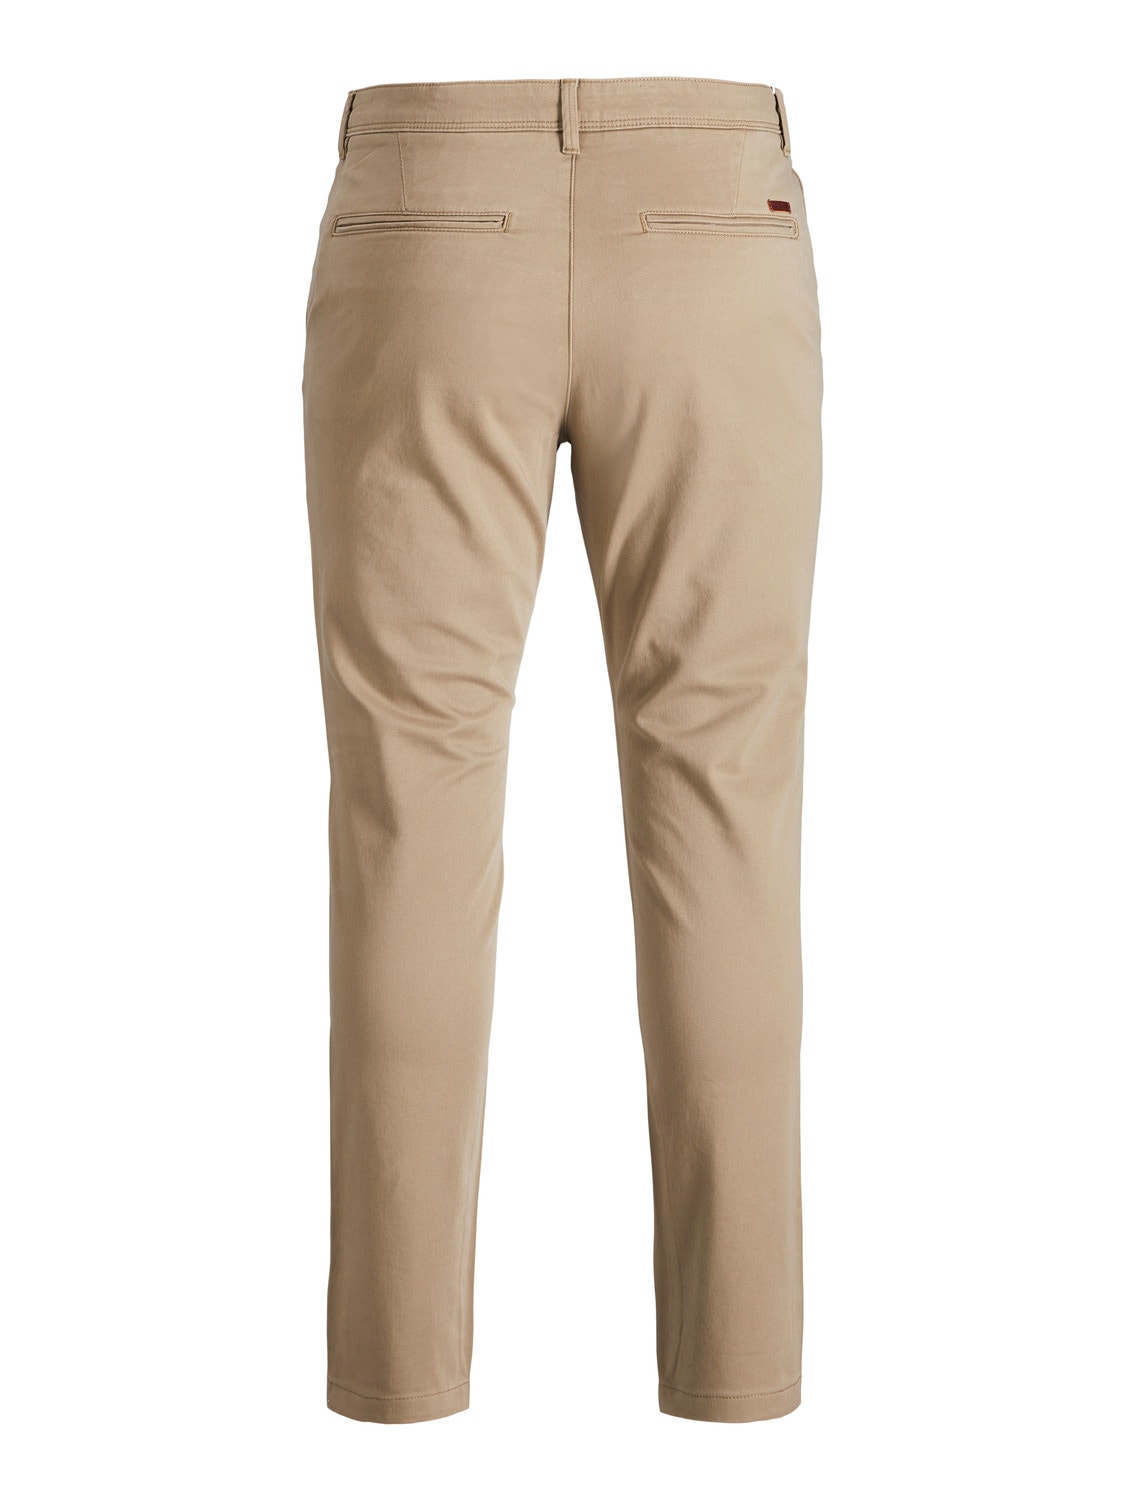 Jack & Jones Slim Fit Spodnie chino -Beige - 12150160